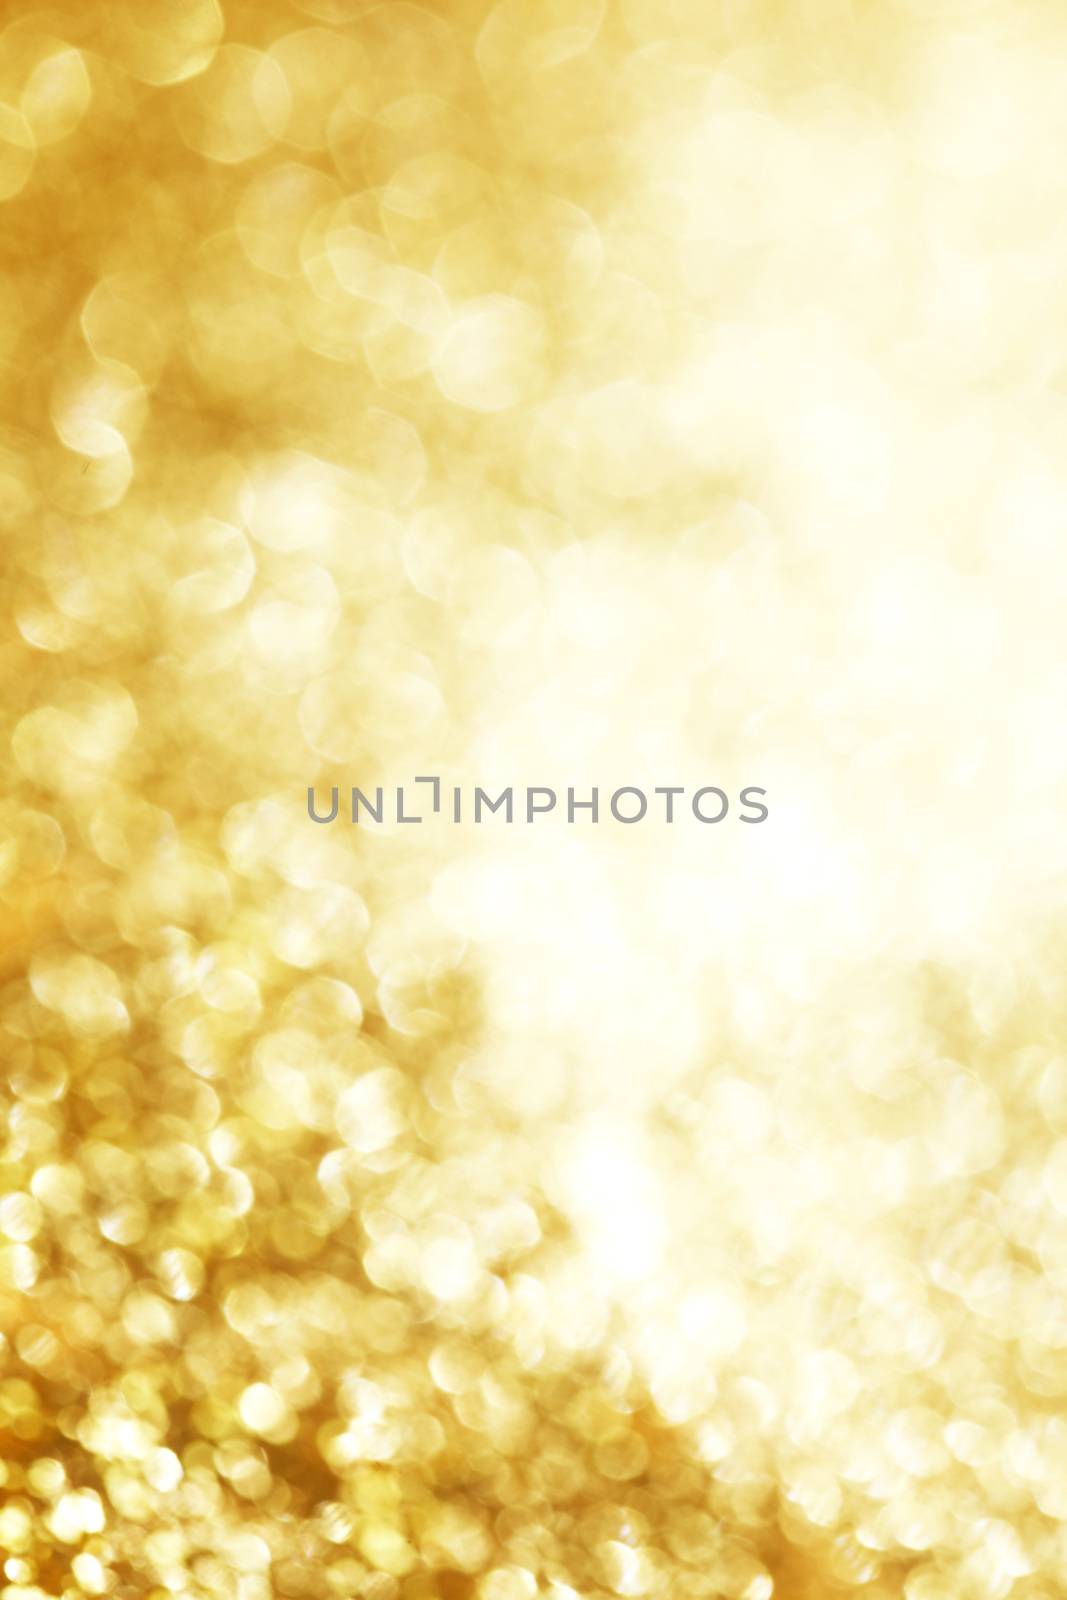 Golden Christmas bright glittering texture background